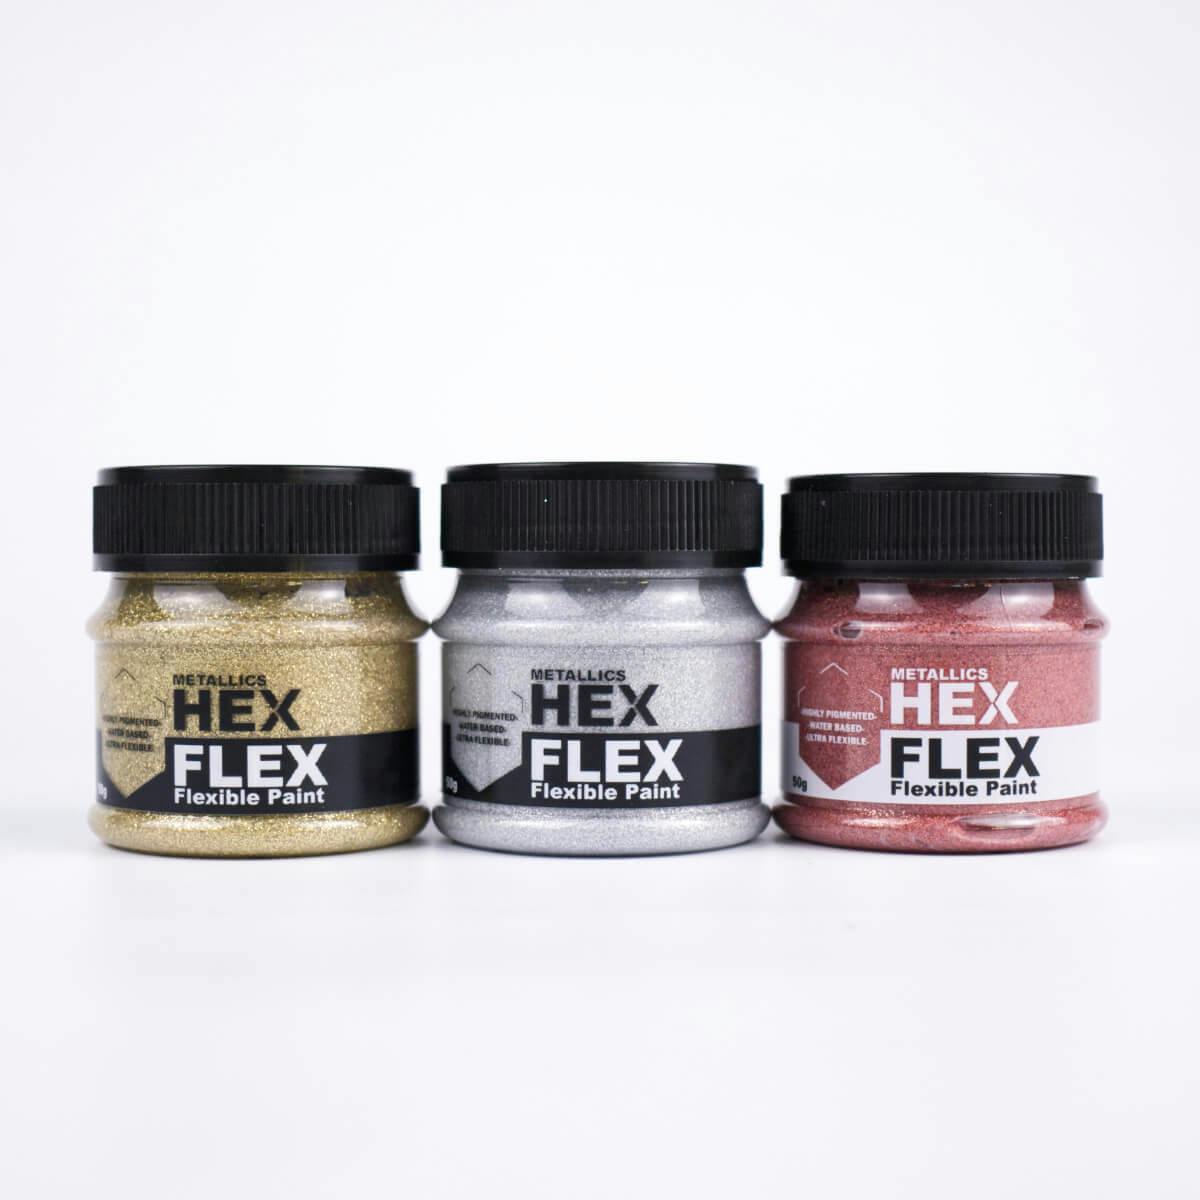 Sample of all three HexFlex Metallics glitter metallic colours